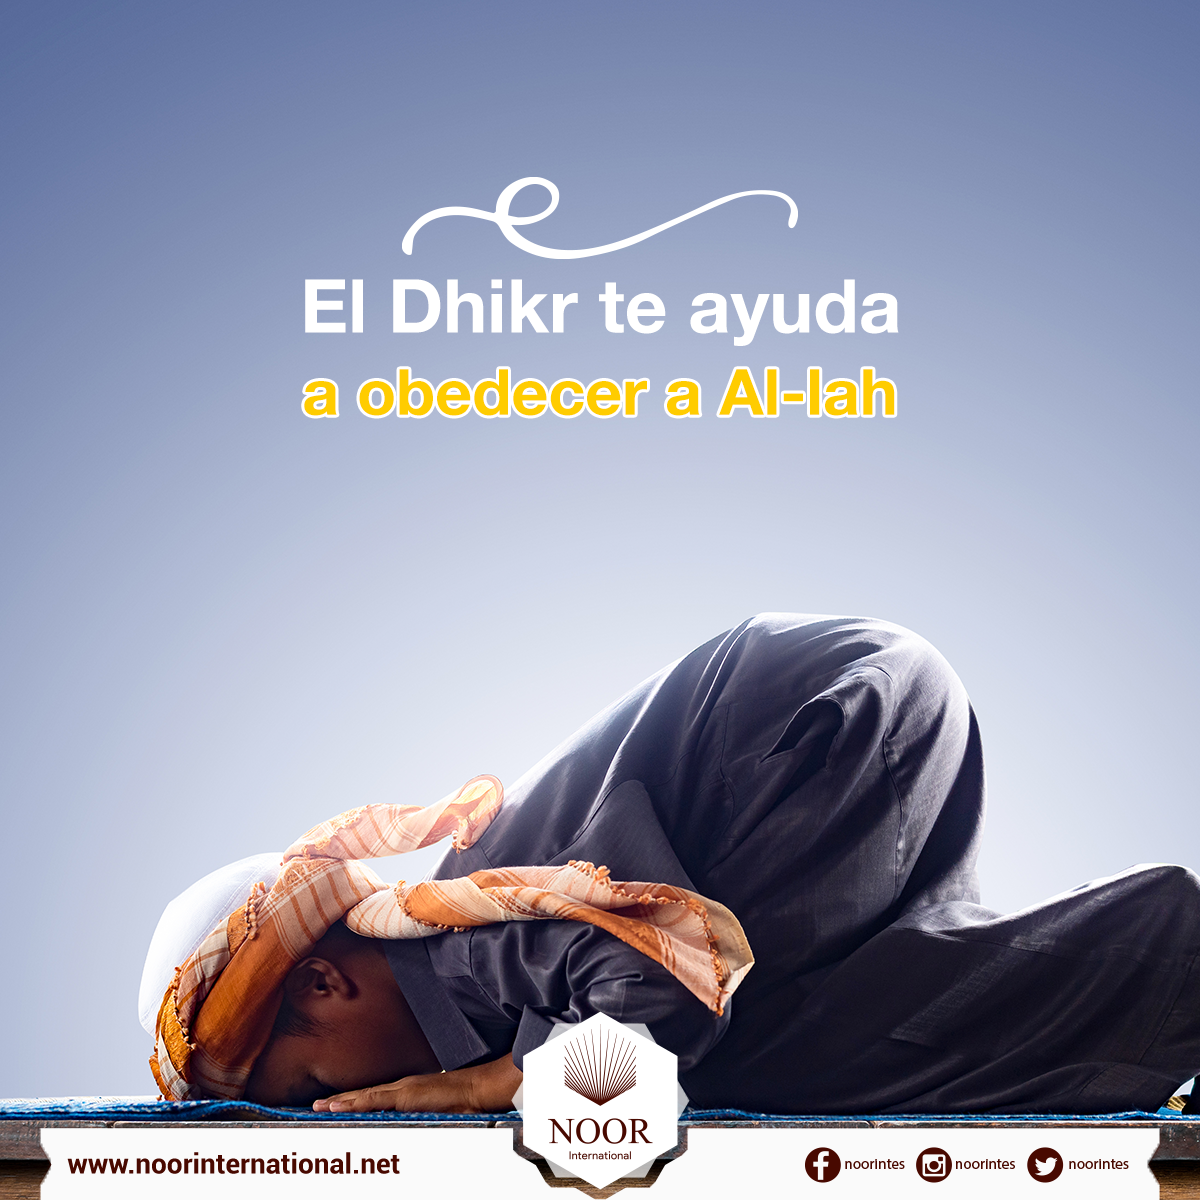 El Dhikr te ayuda a obedecer a Al-lah